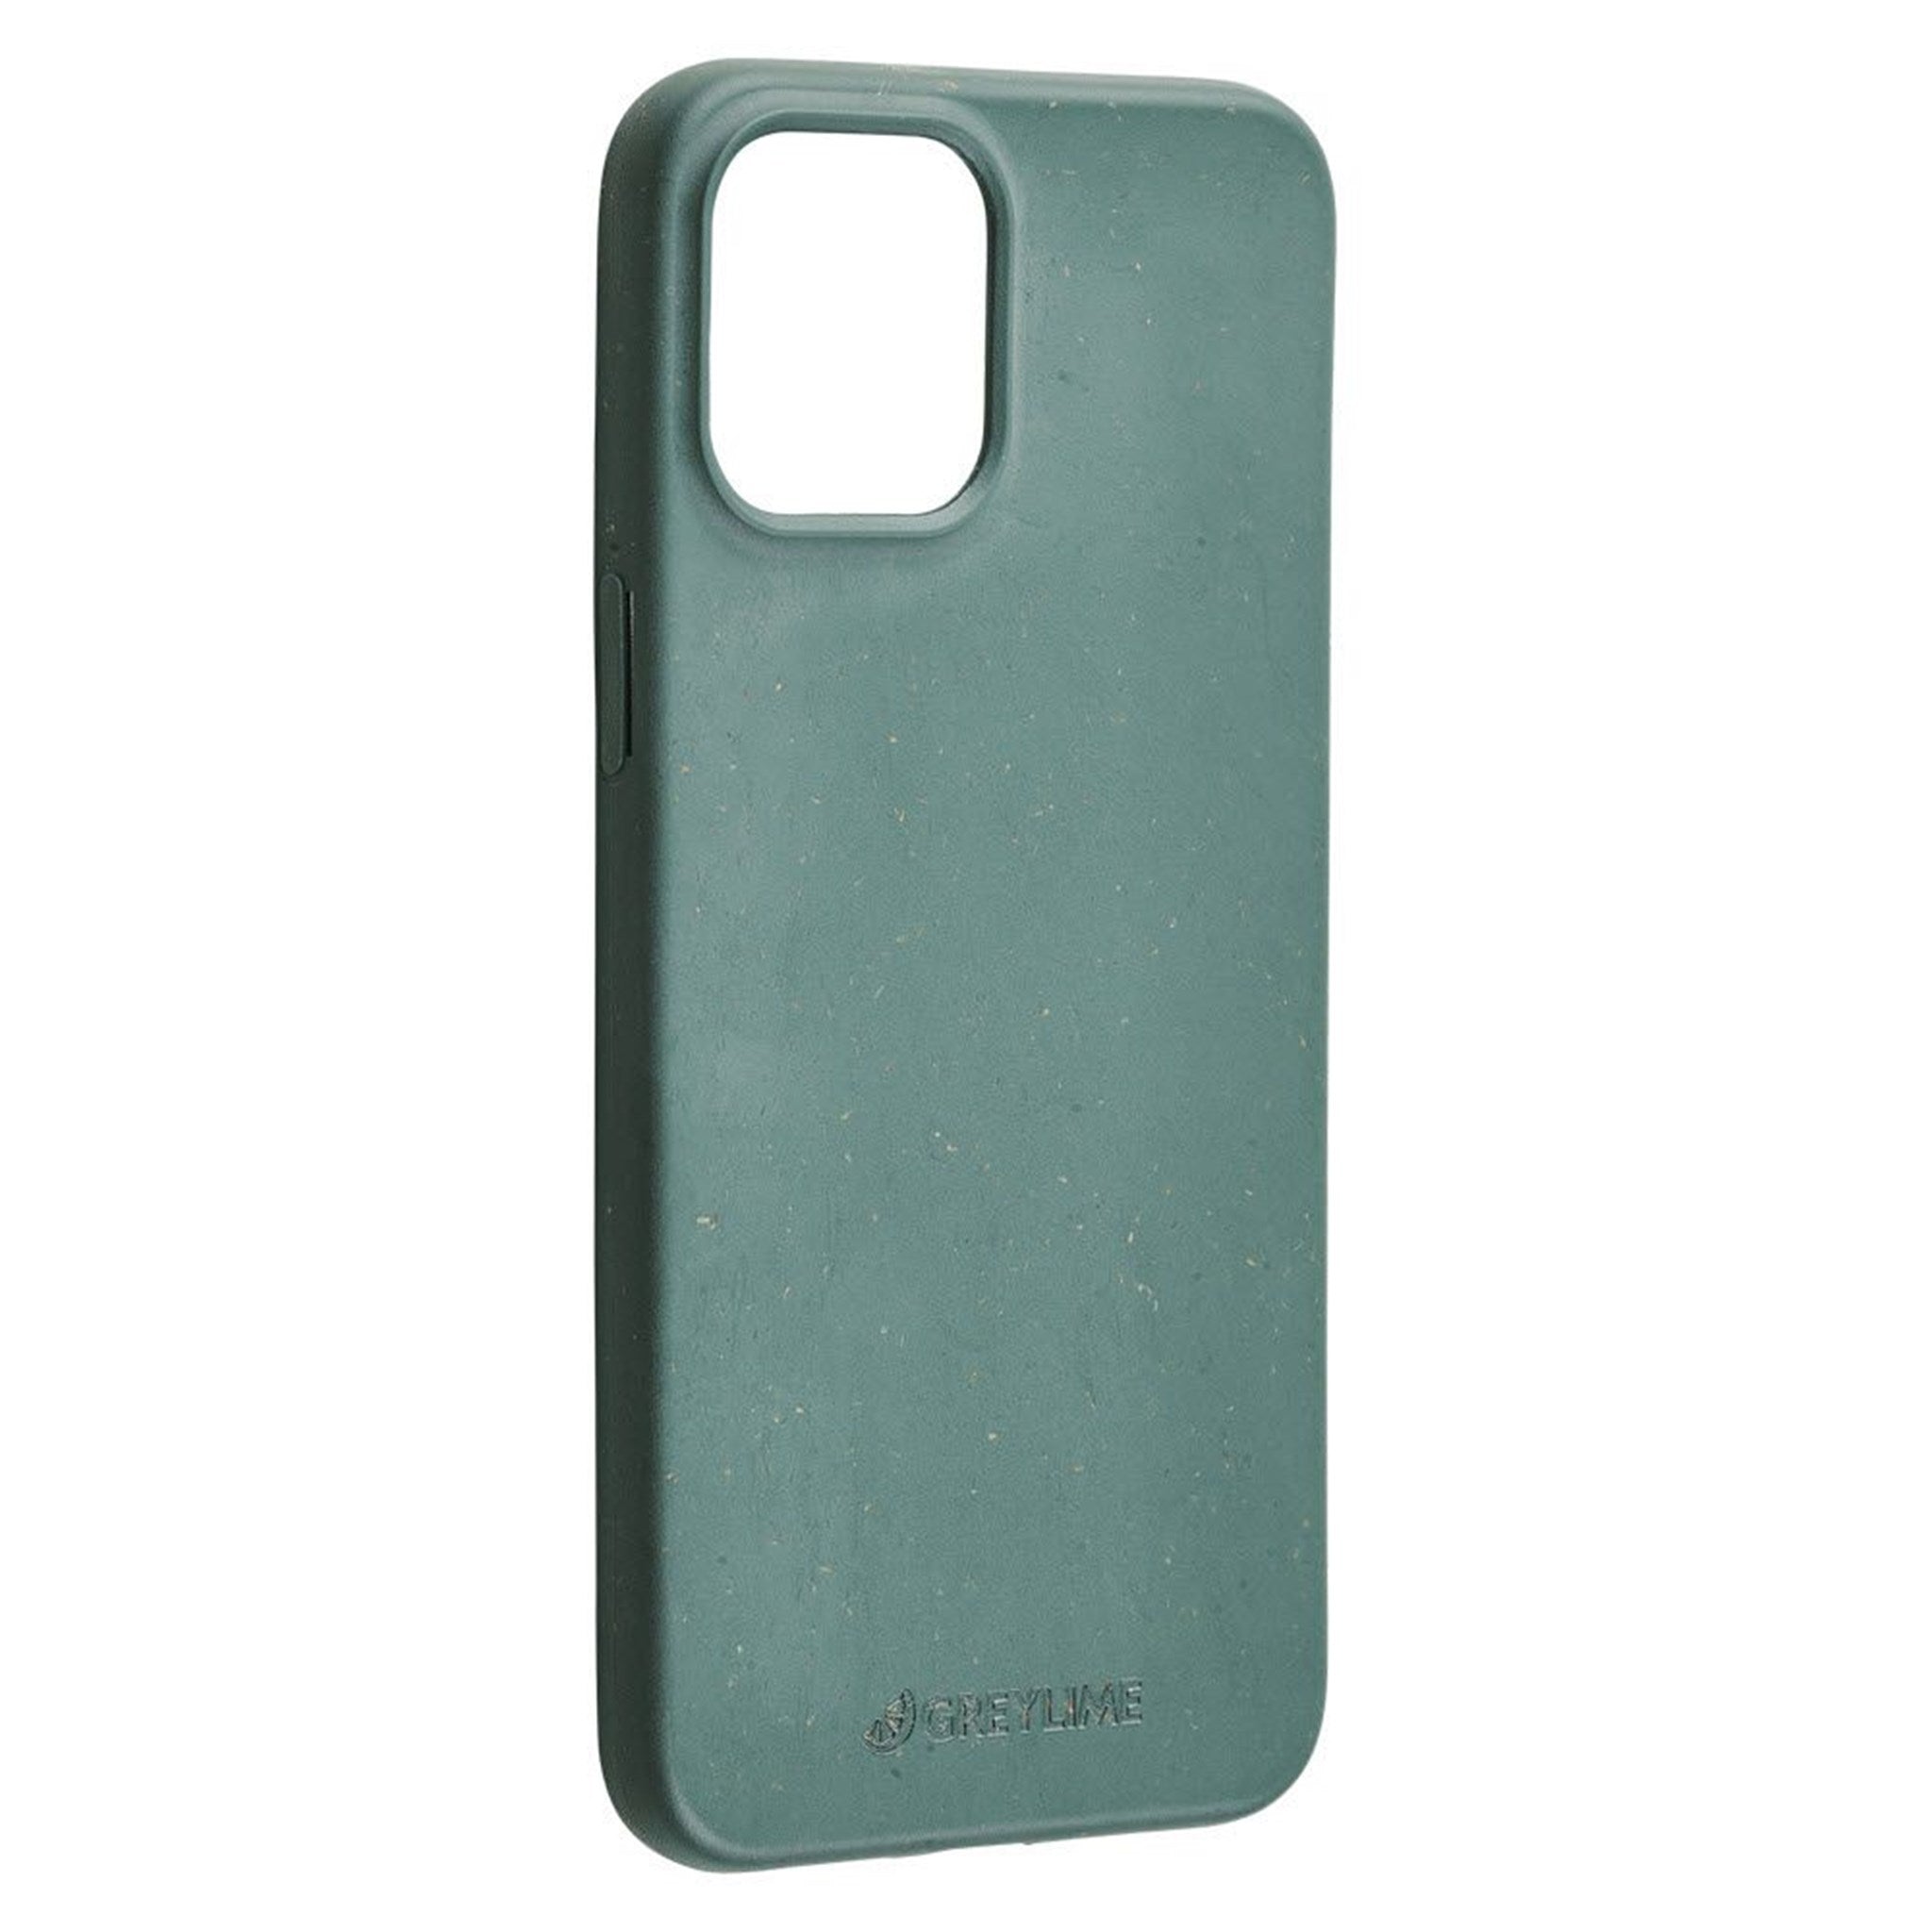 GreyLime-iPhone-12-Pro-Max-Biodegdrable-Cover-Dark-Green-COIP12L04-V1.jpg